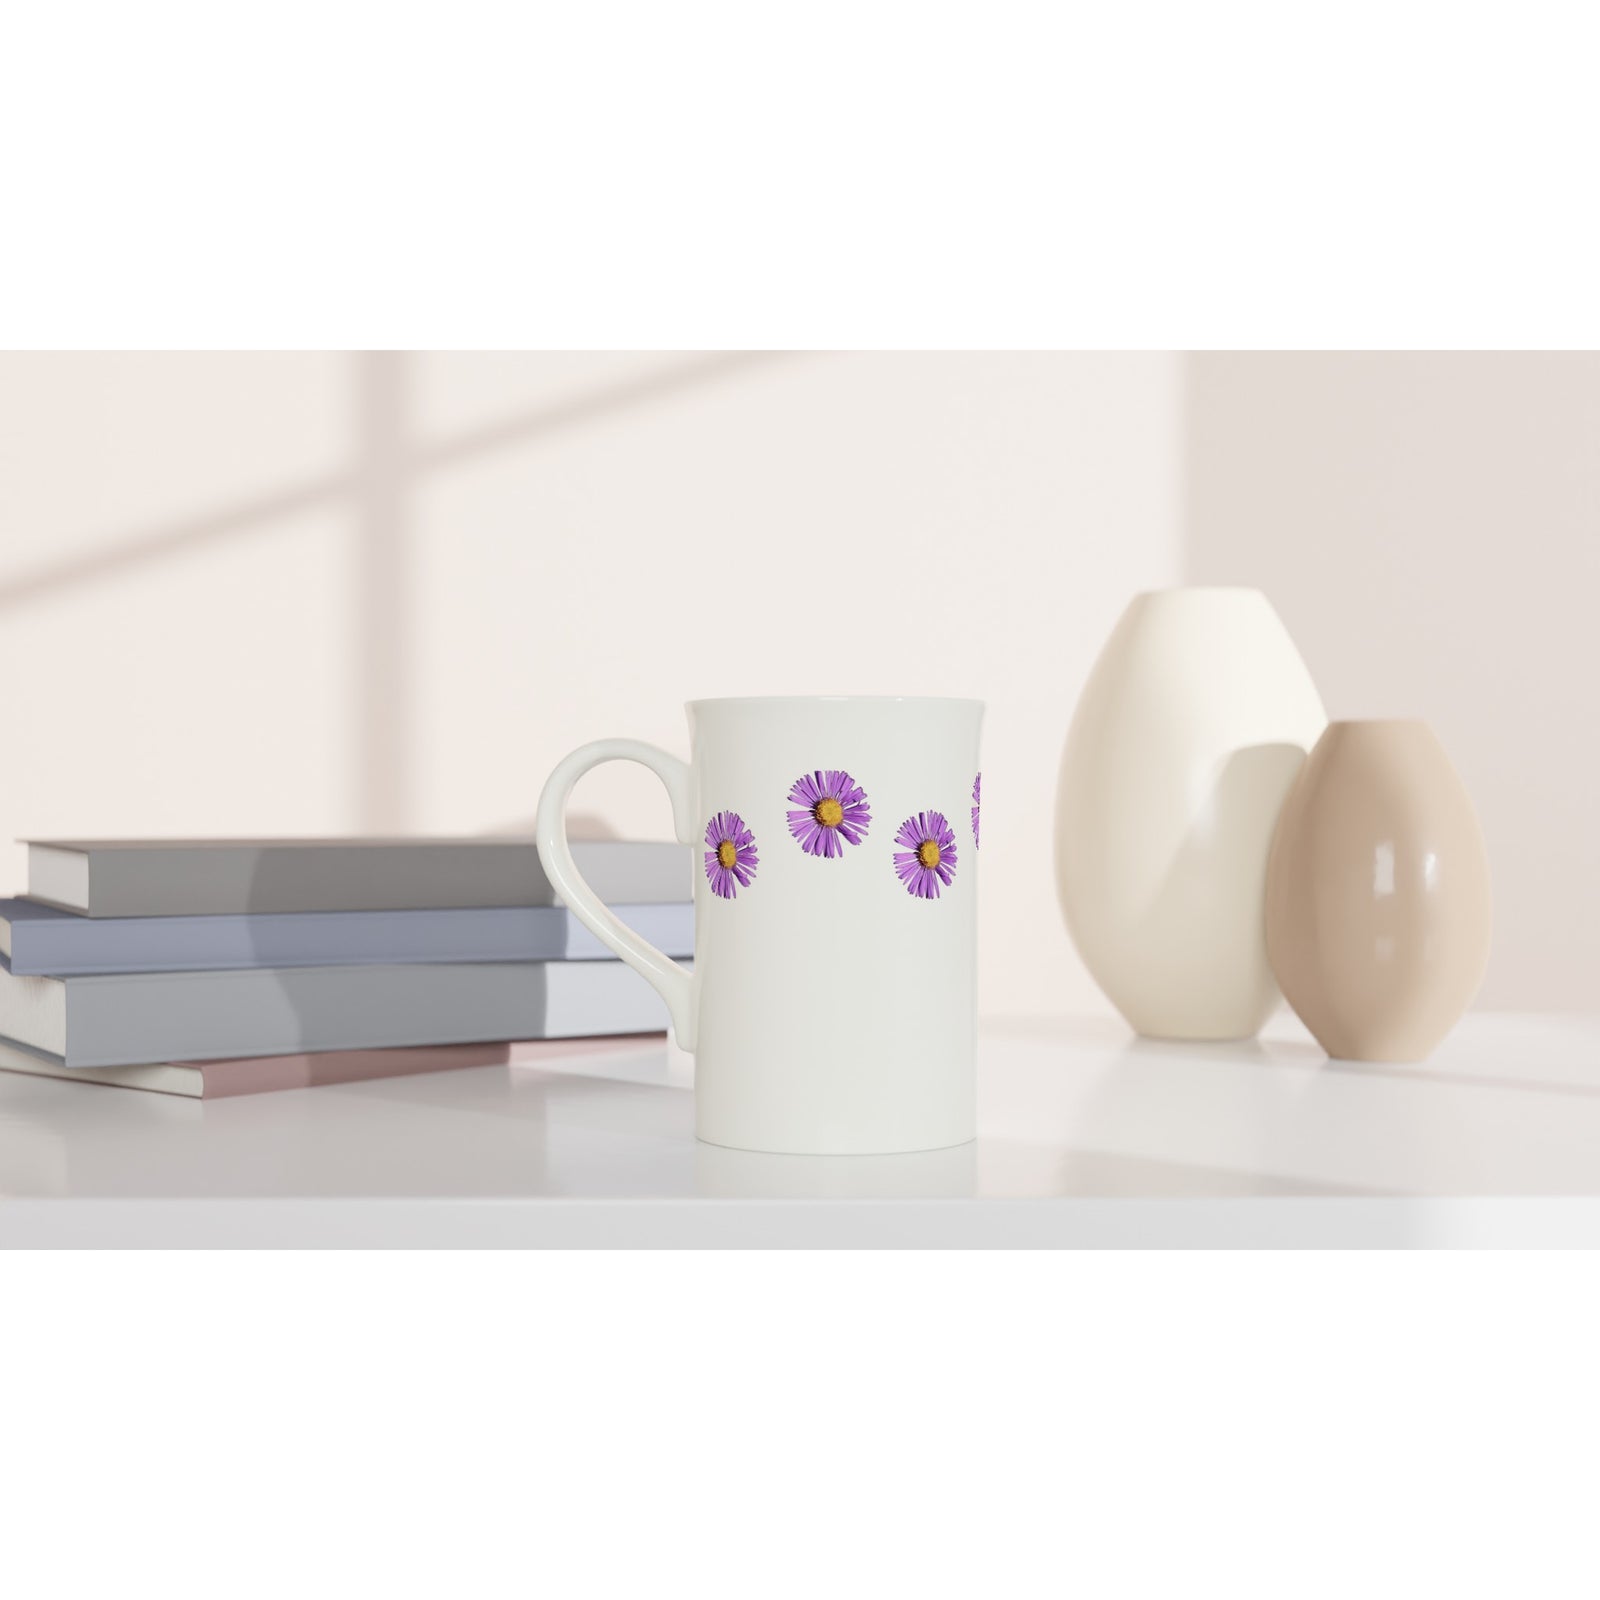 10 oz slim porcelain mug purple aster wildflower floral pattern